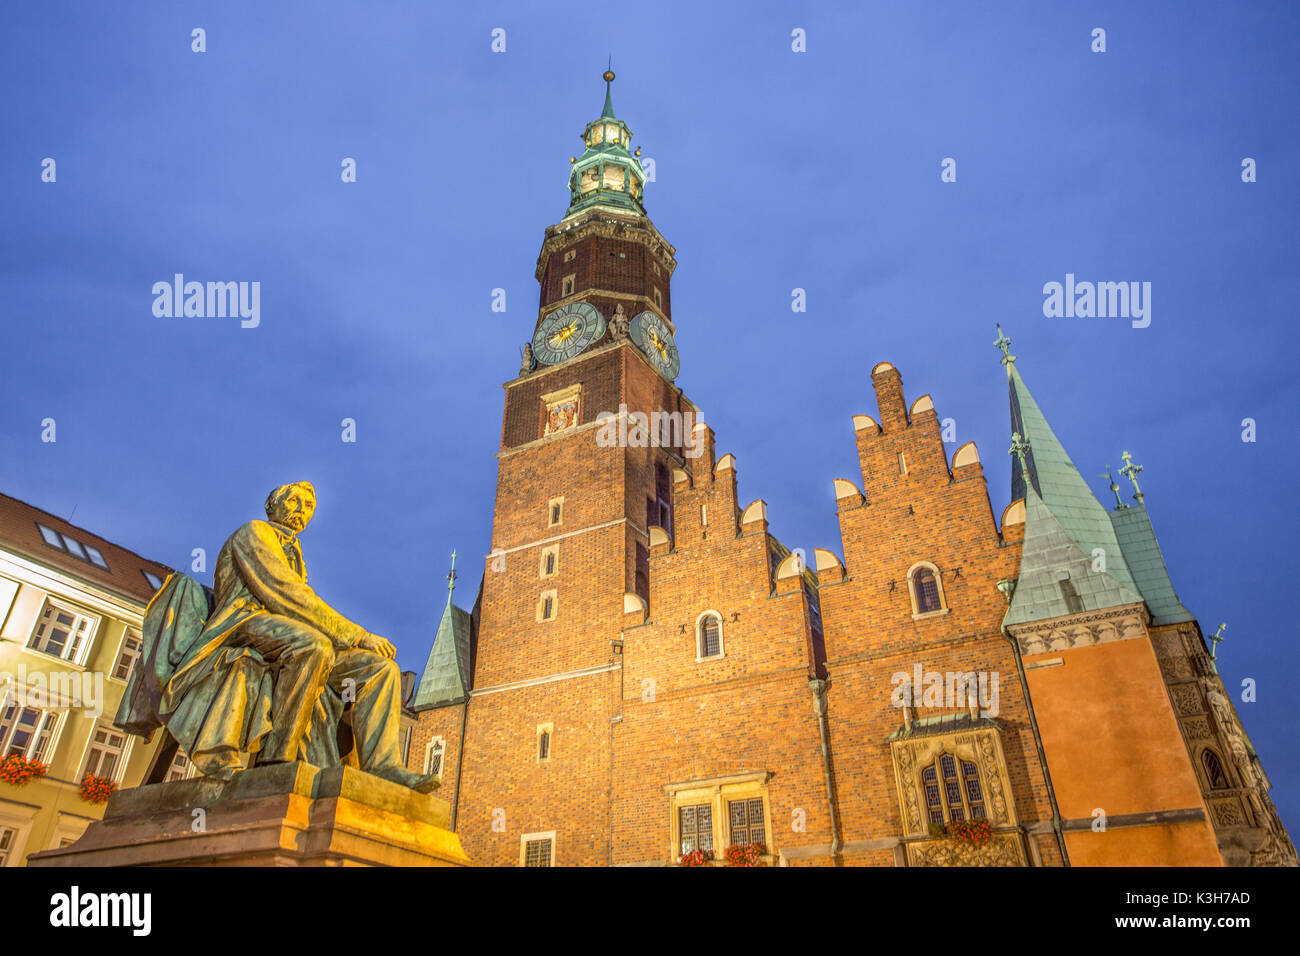 Poland, Wroclaw City, Market Square, Town Hall Building Rynek, Fredro Monument. Stock Photo